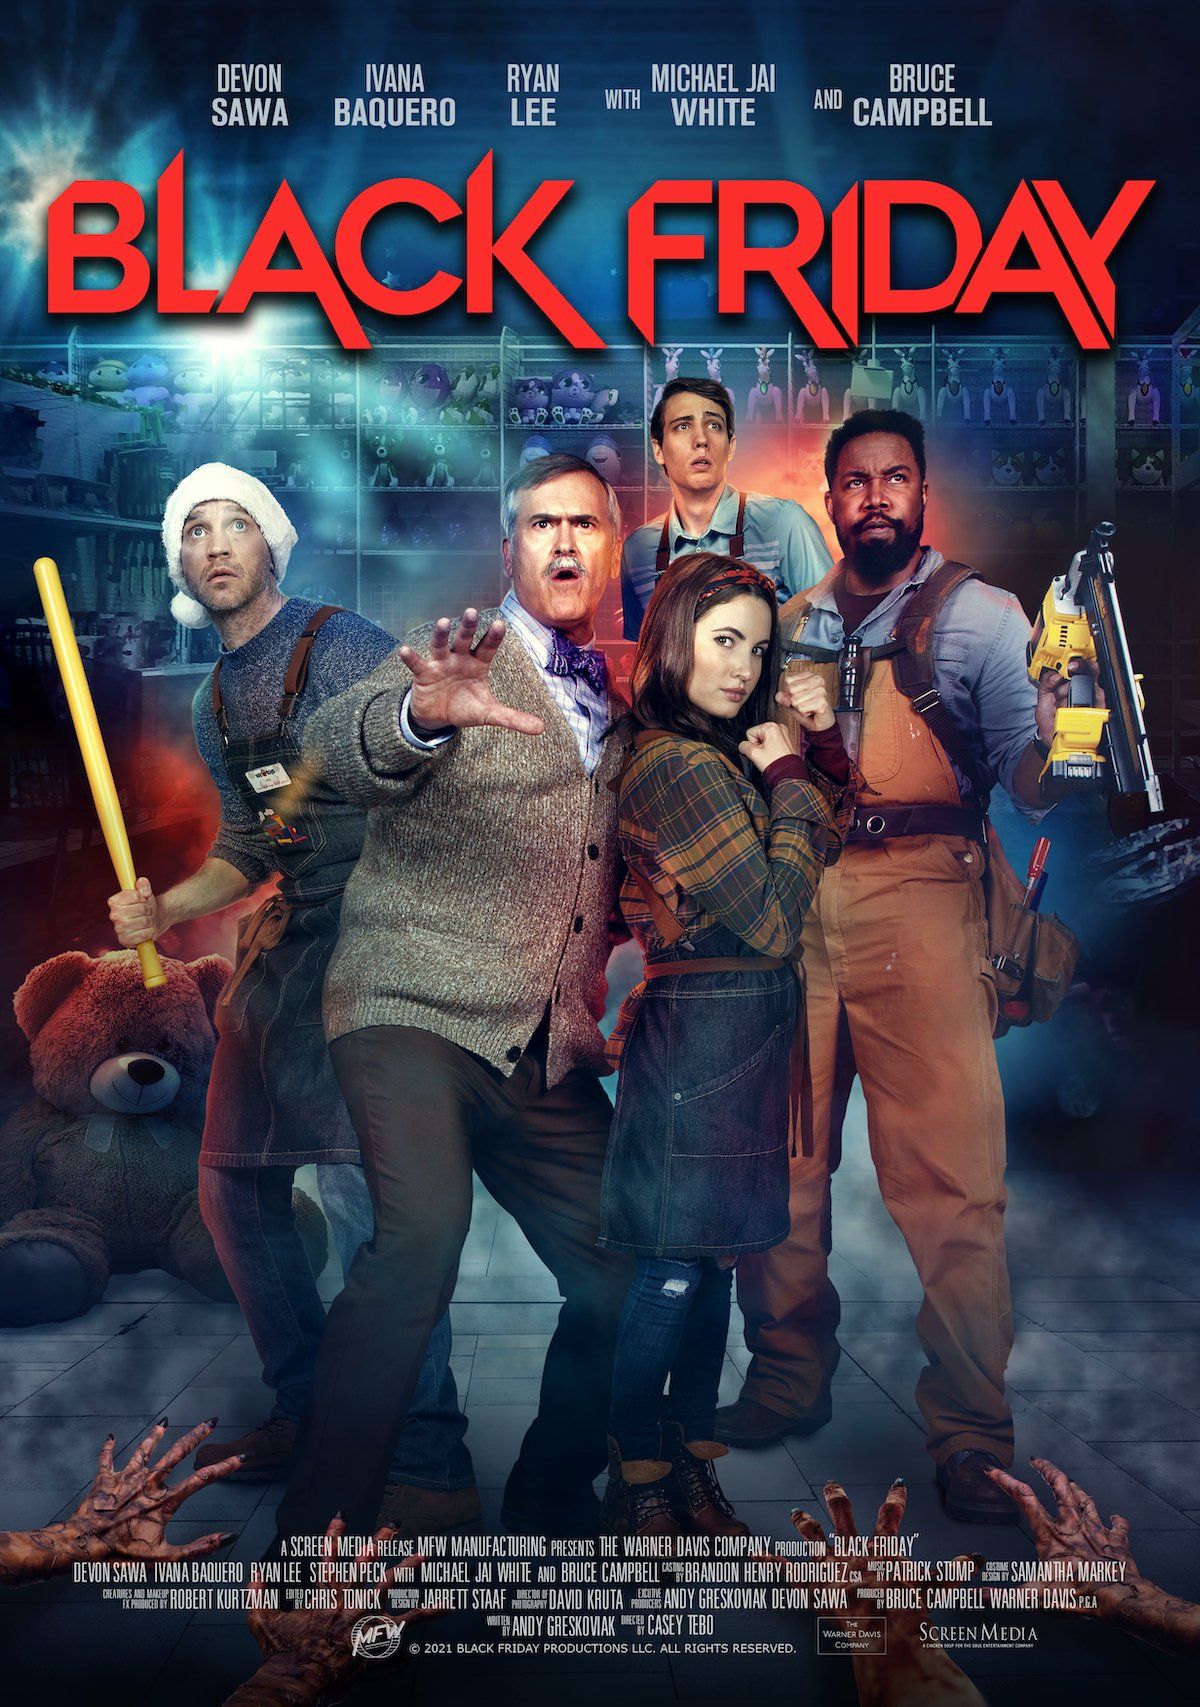 Black Friday Trailer Reveals Bruce Campbells Campy Horror Movie